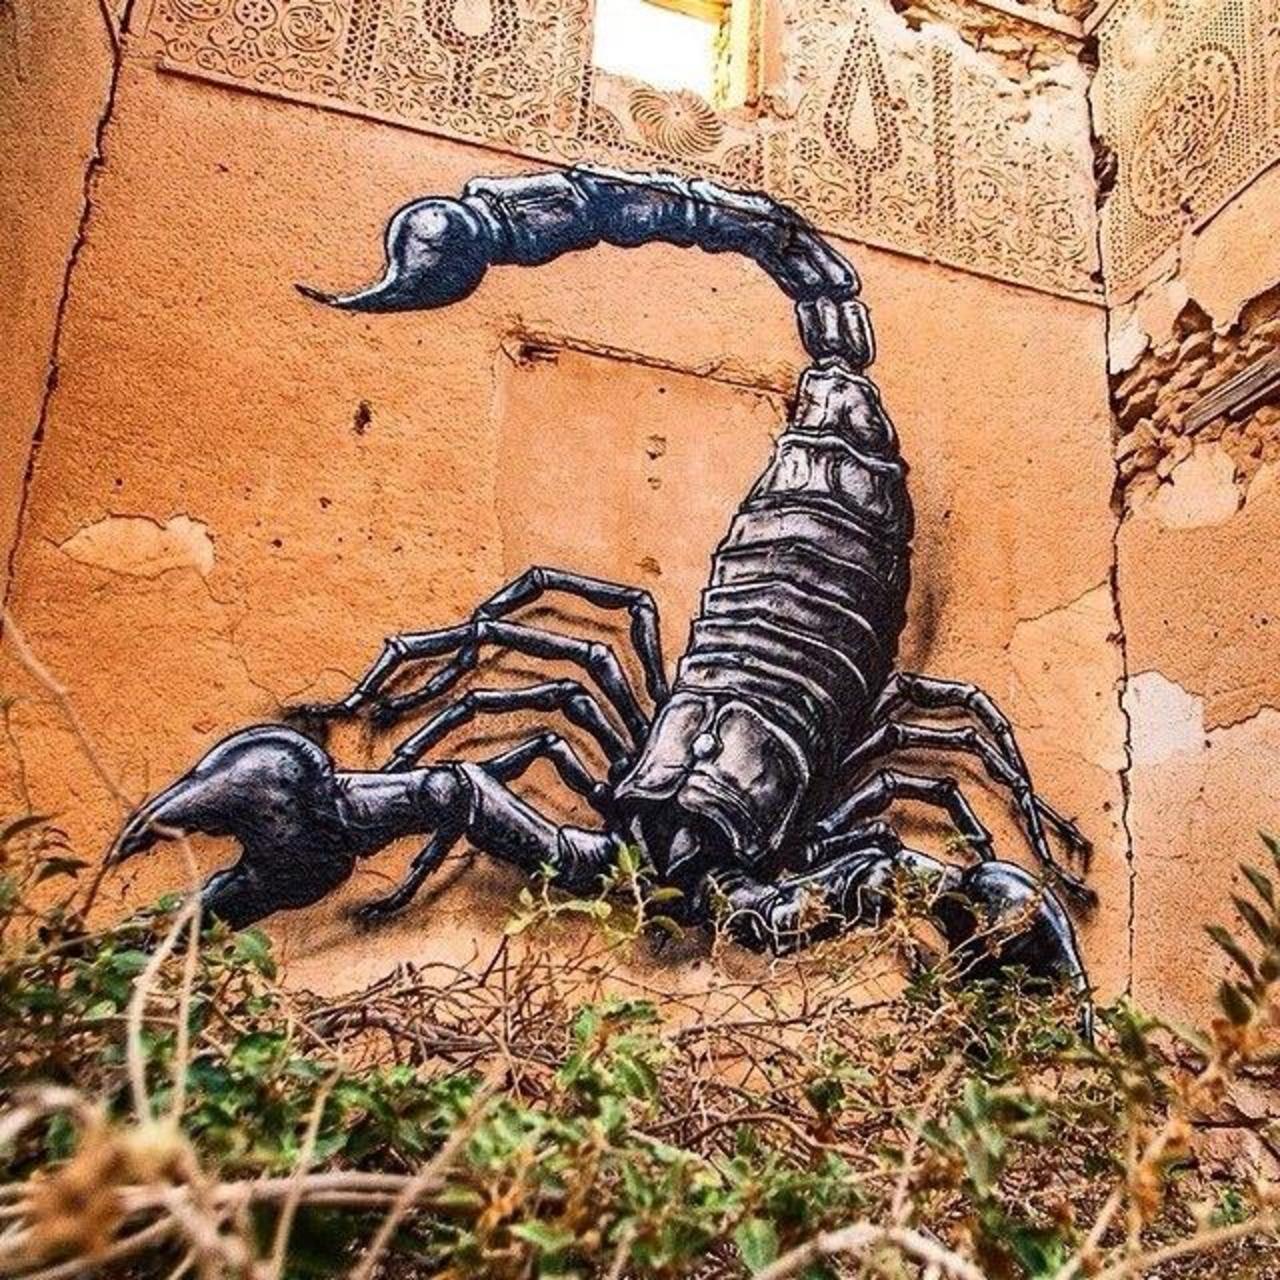 http://ift.tt/1NEBzCX Artist ROA new Scorpion Street Art mural in Djerba, Tunisia #art #graffiti #nature #stree… http://t.co/By50QCSNiQ